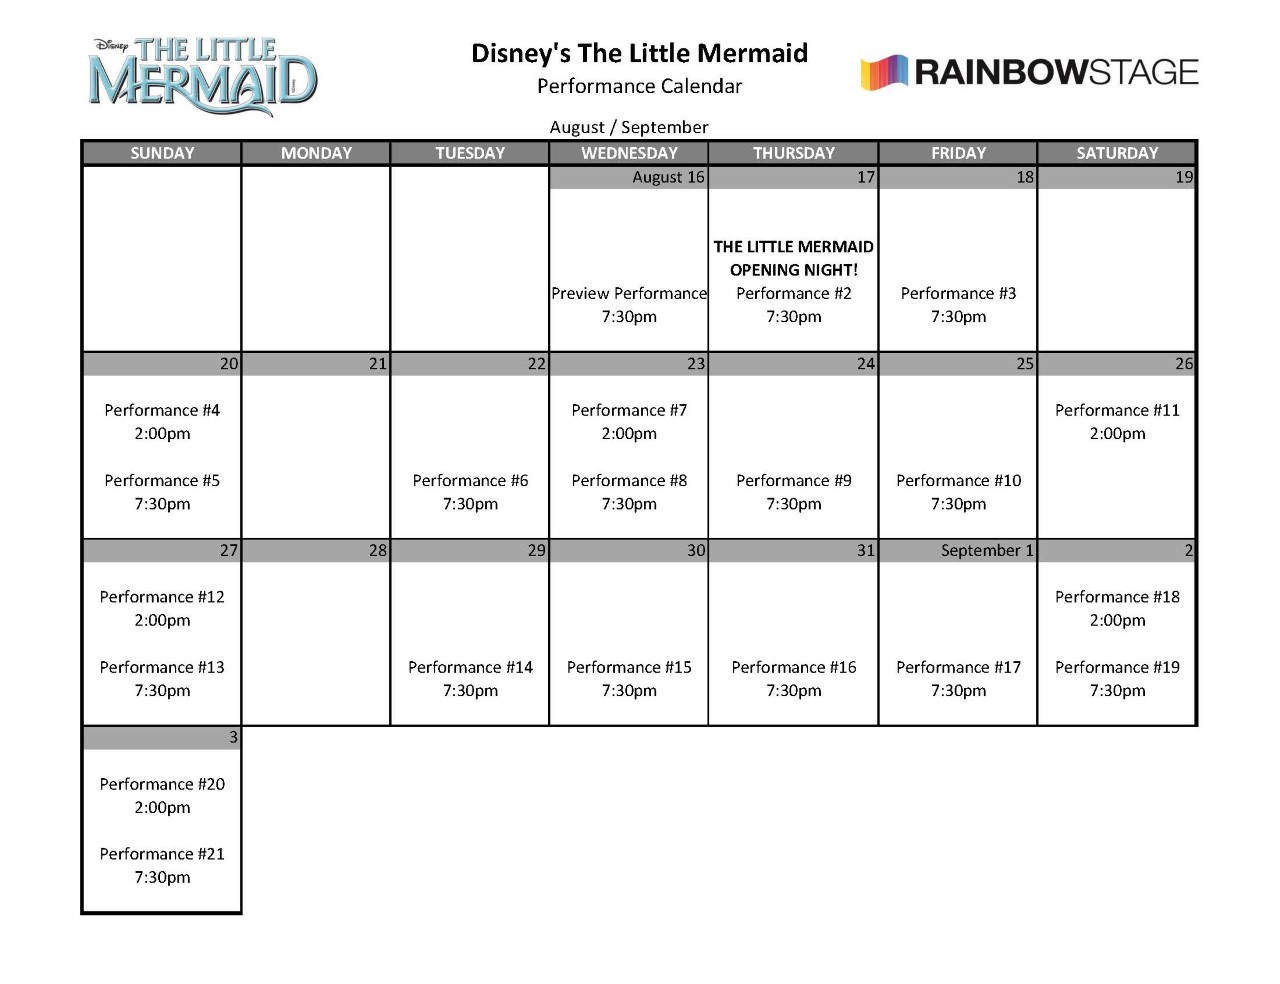 The Little Mermaid Schedule